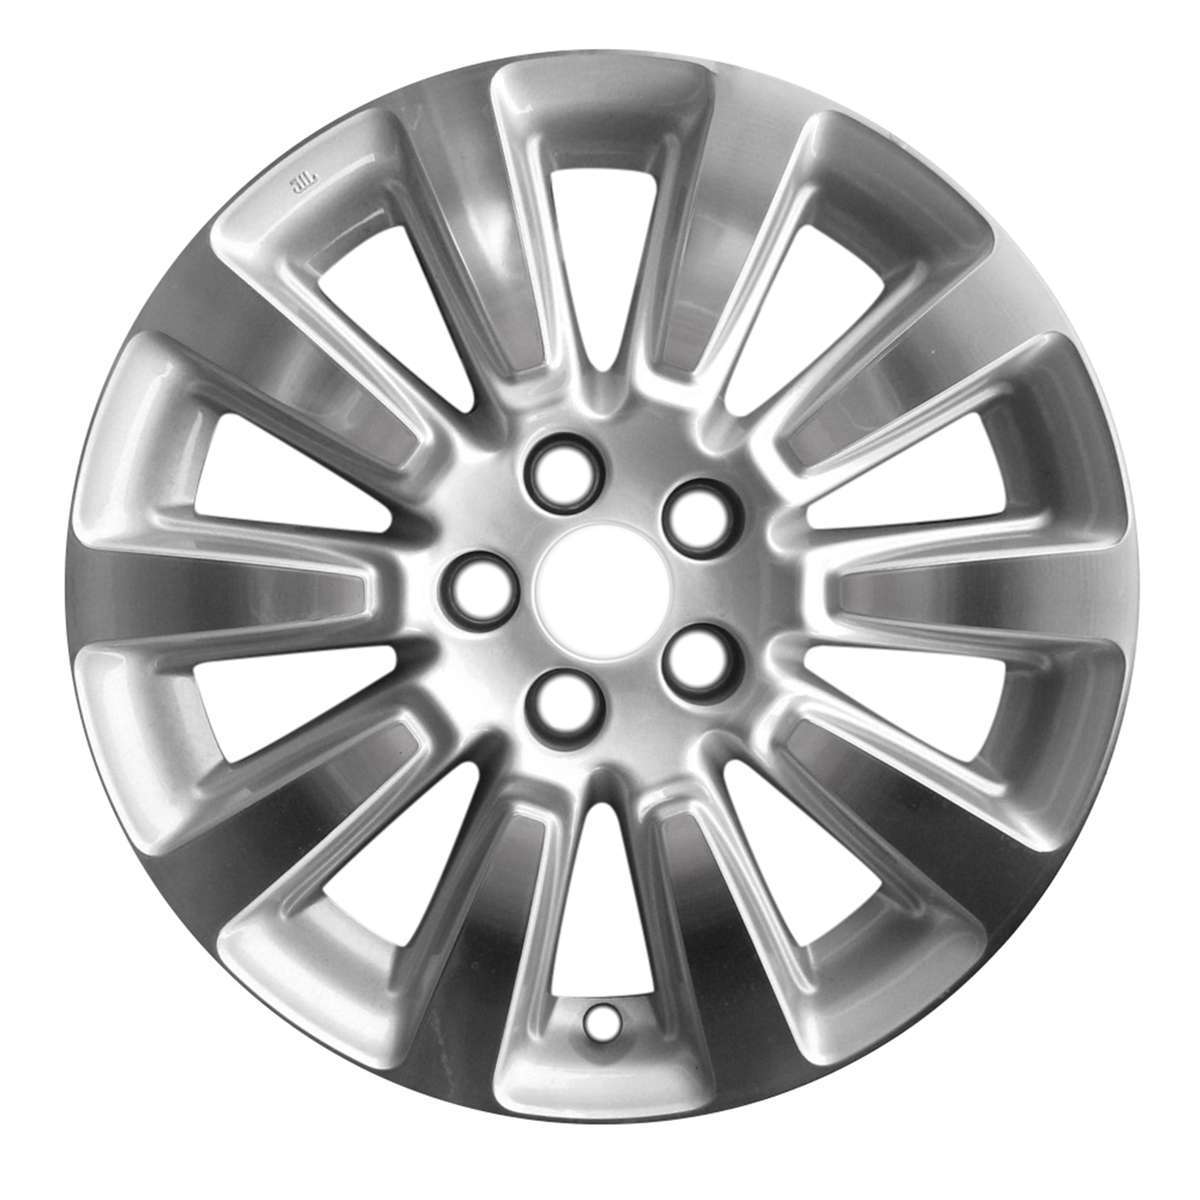 2019 Toyota Sienna 18" OEM Wheel Rim without Ledge Thick Valve Stem Hole W69583AMS